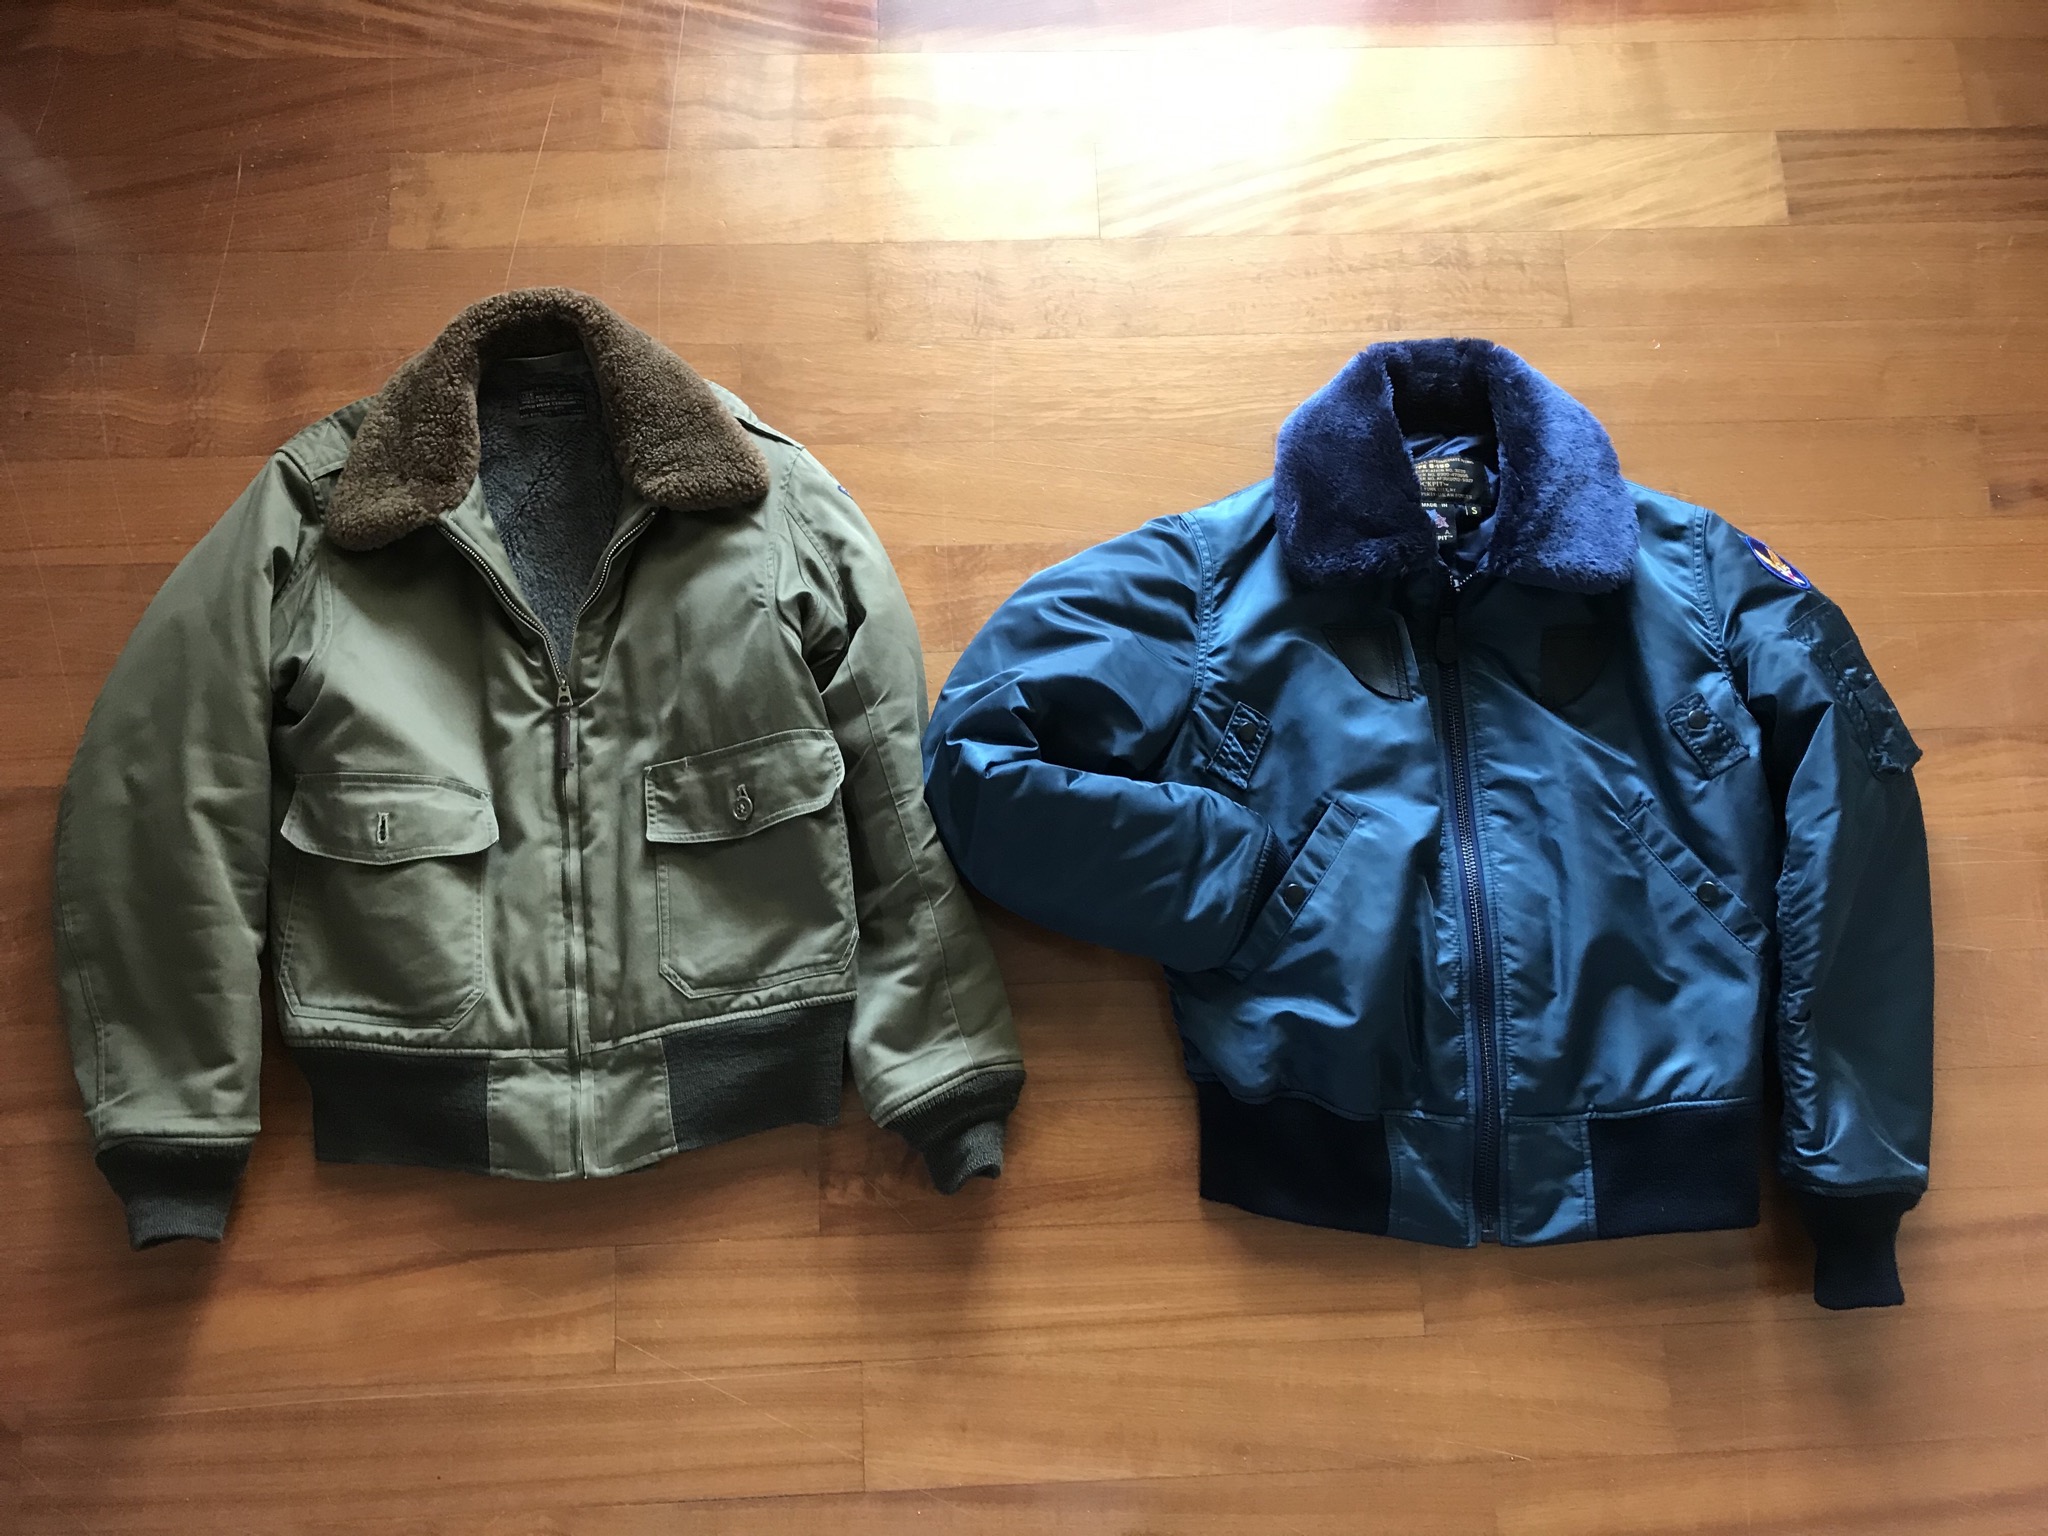 Cockpit USA's B15 jacket review | Vintage Leather Jackets Forum